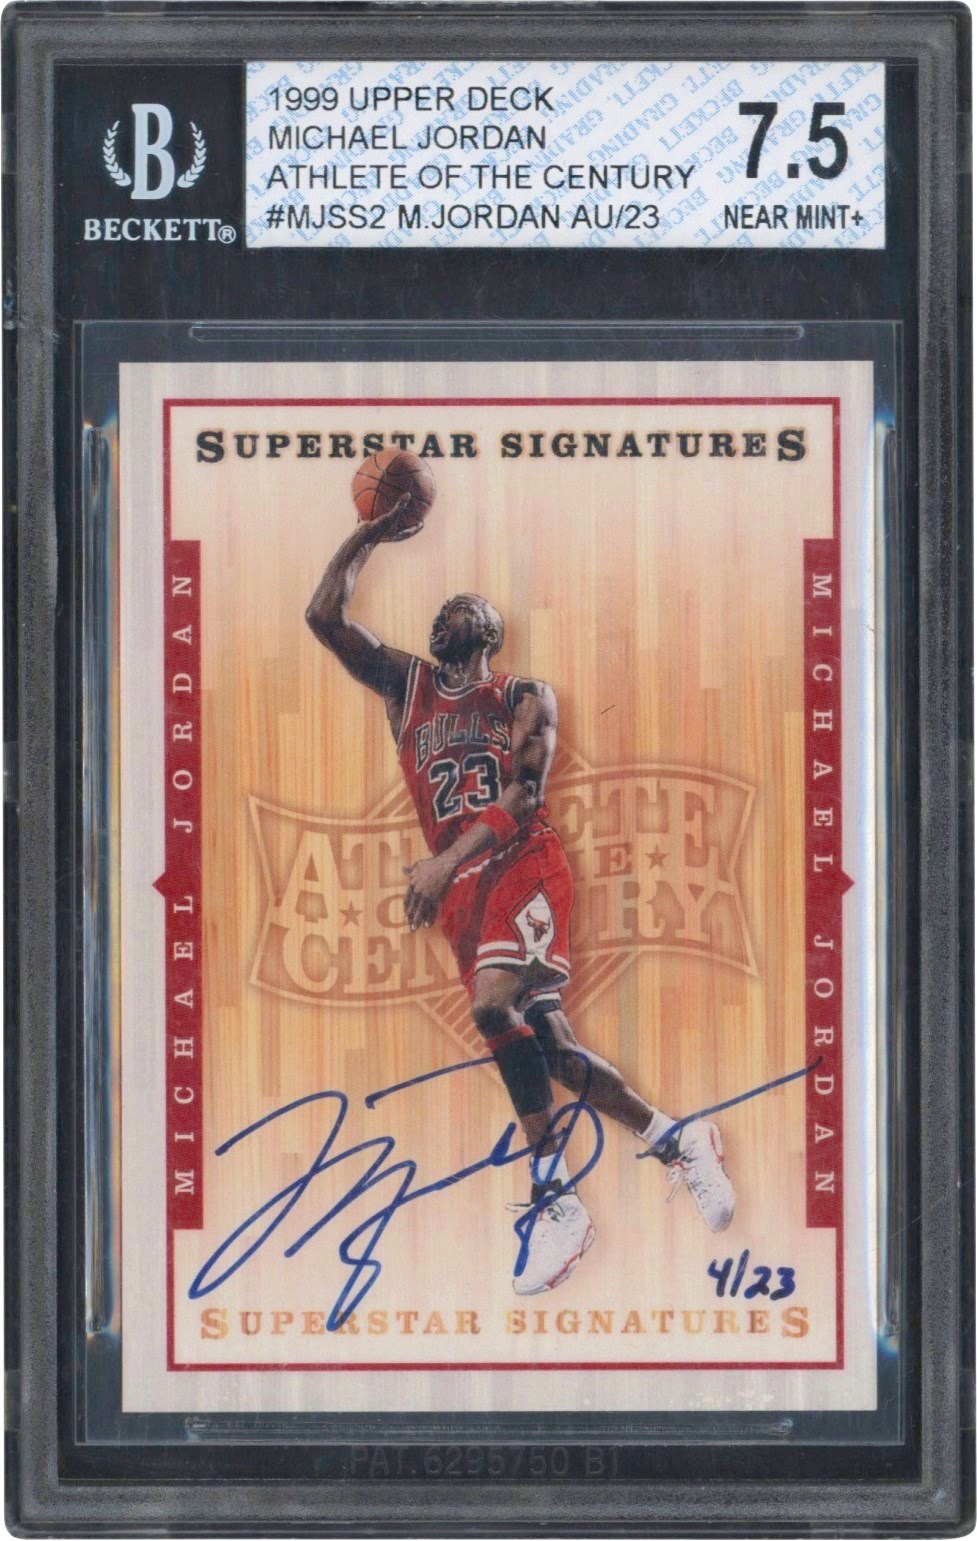 Basketball Cards - 1999 Upper Deck Athlete of the Century Superstar Signatures #MJSS2 Michael Jordan Autograph Card #4/23 BGS NM+ 7.5